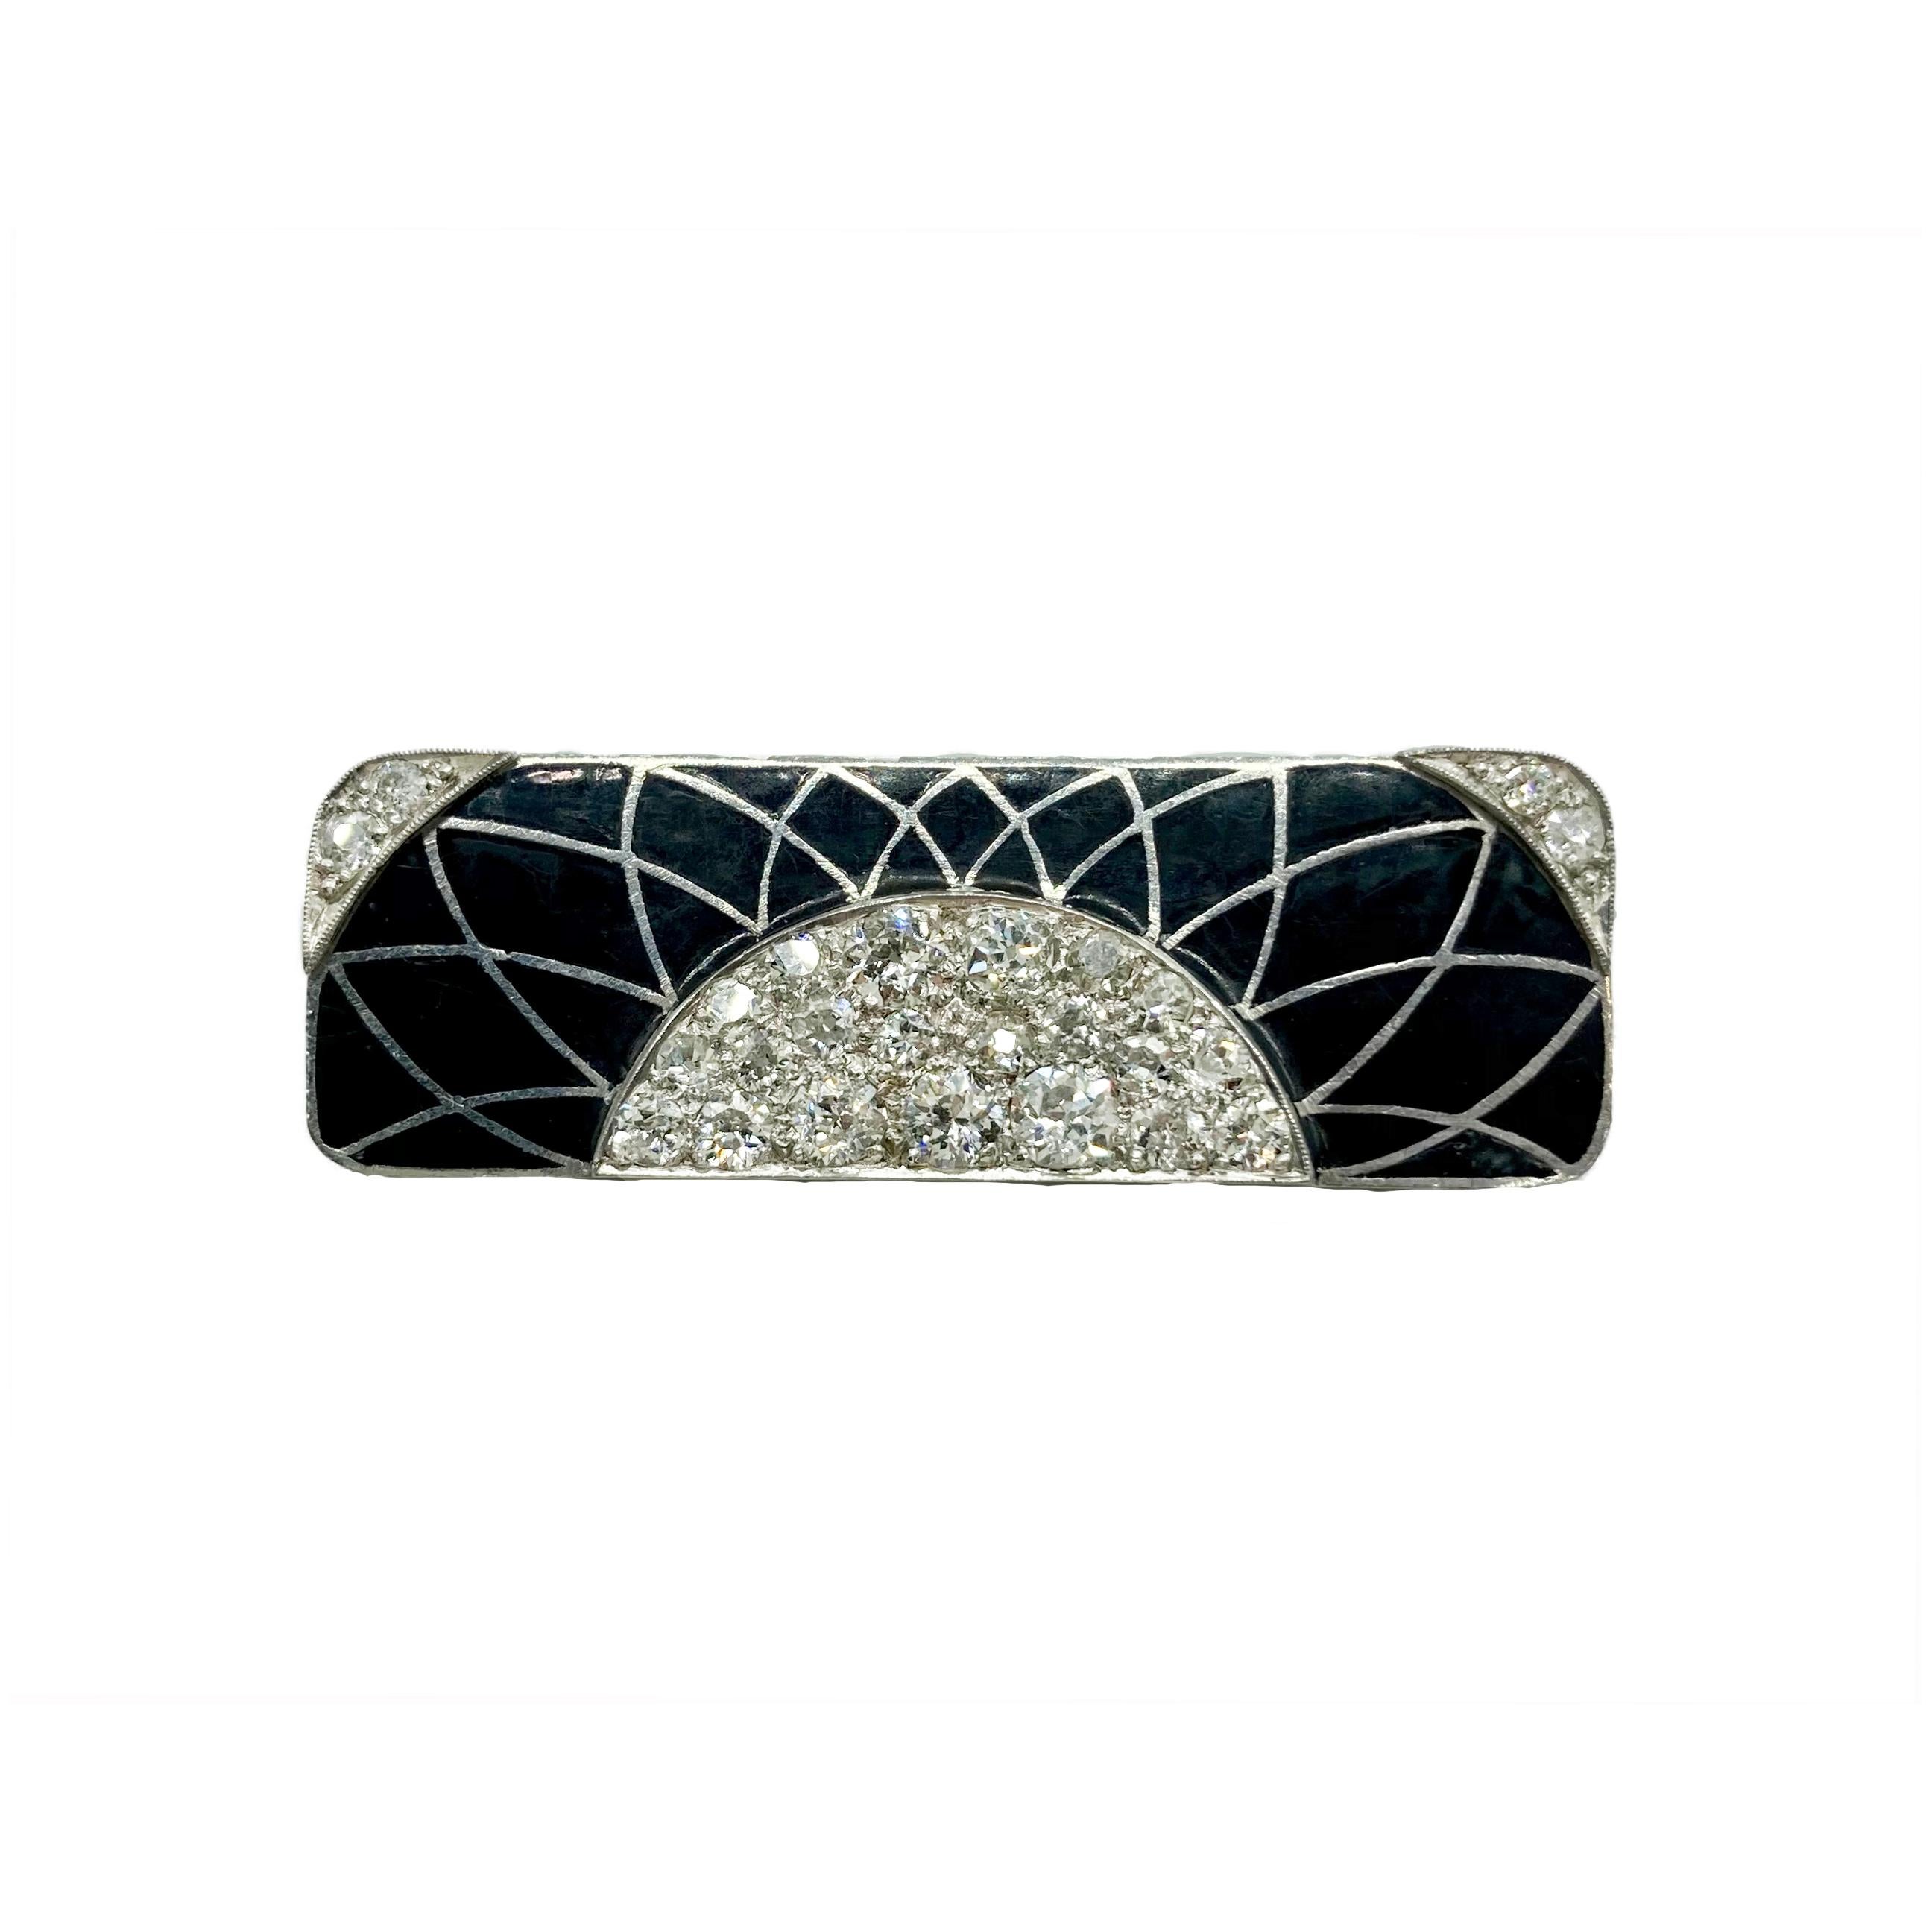 Brilliant Cut Art Deco Diamond and Enamel Brooch For Sale